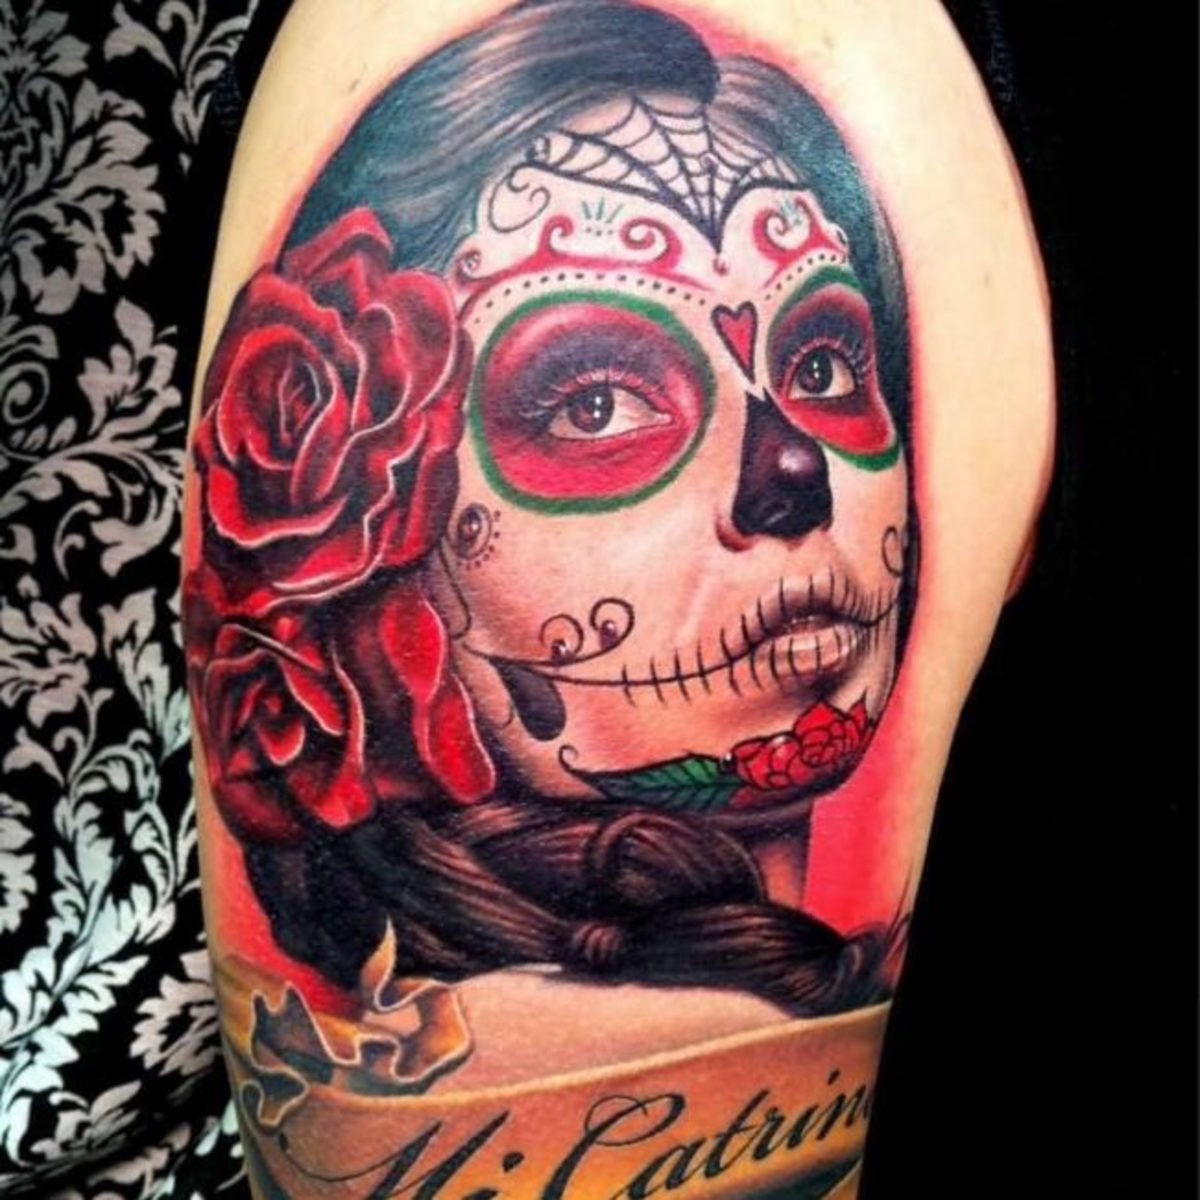 Meksikansk-tattoos_-2-650x650